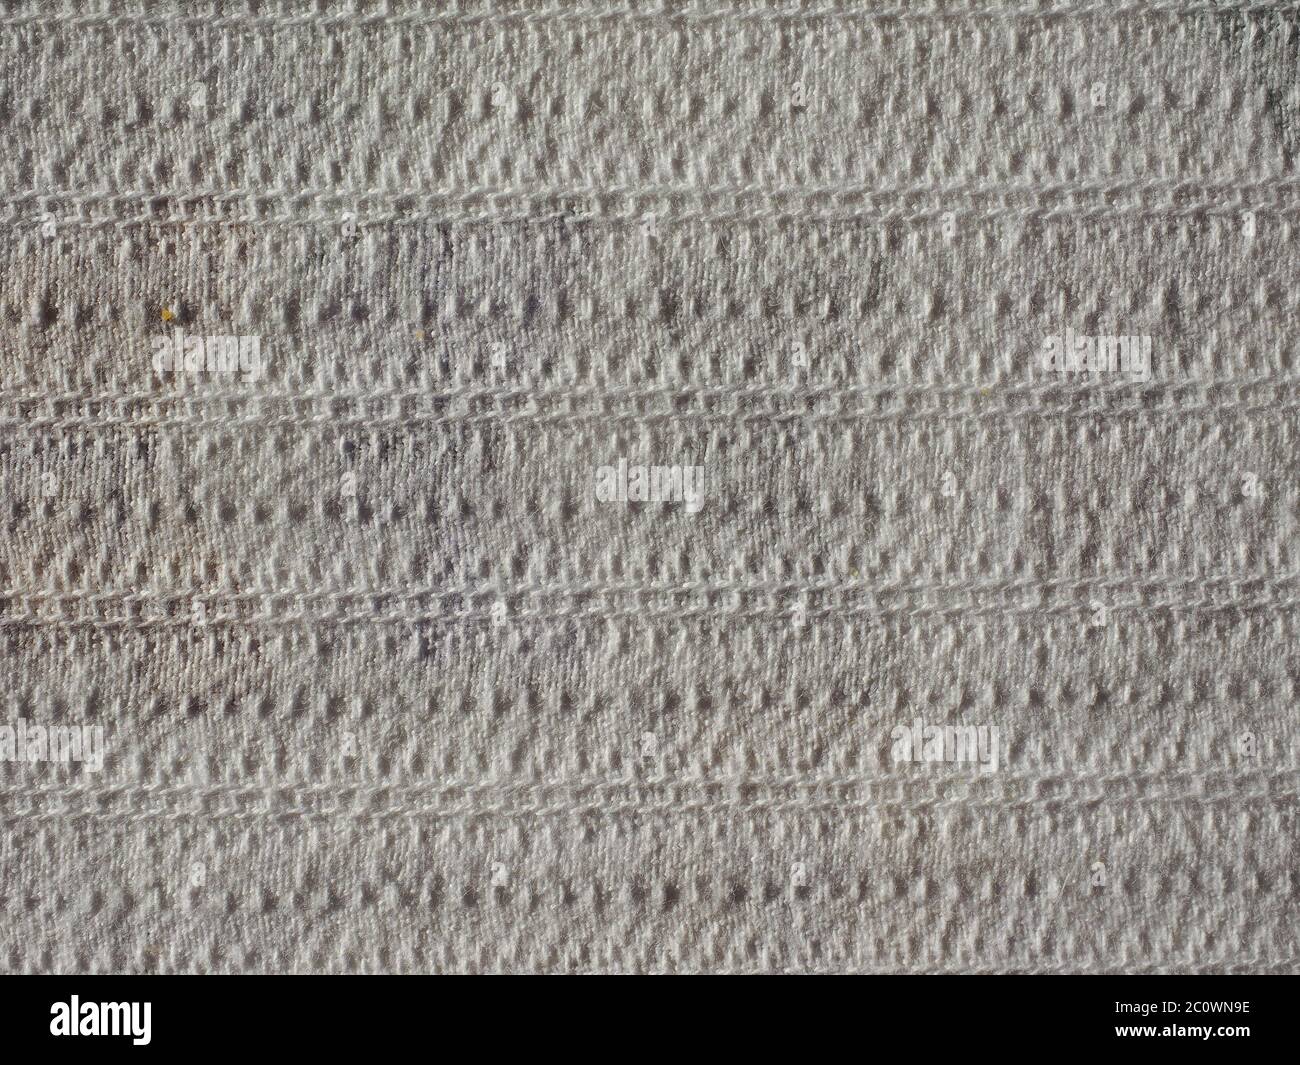 White fabric texture background Stock Photo - Alamy